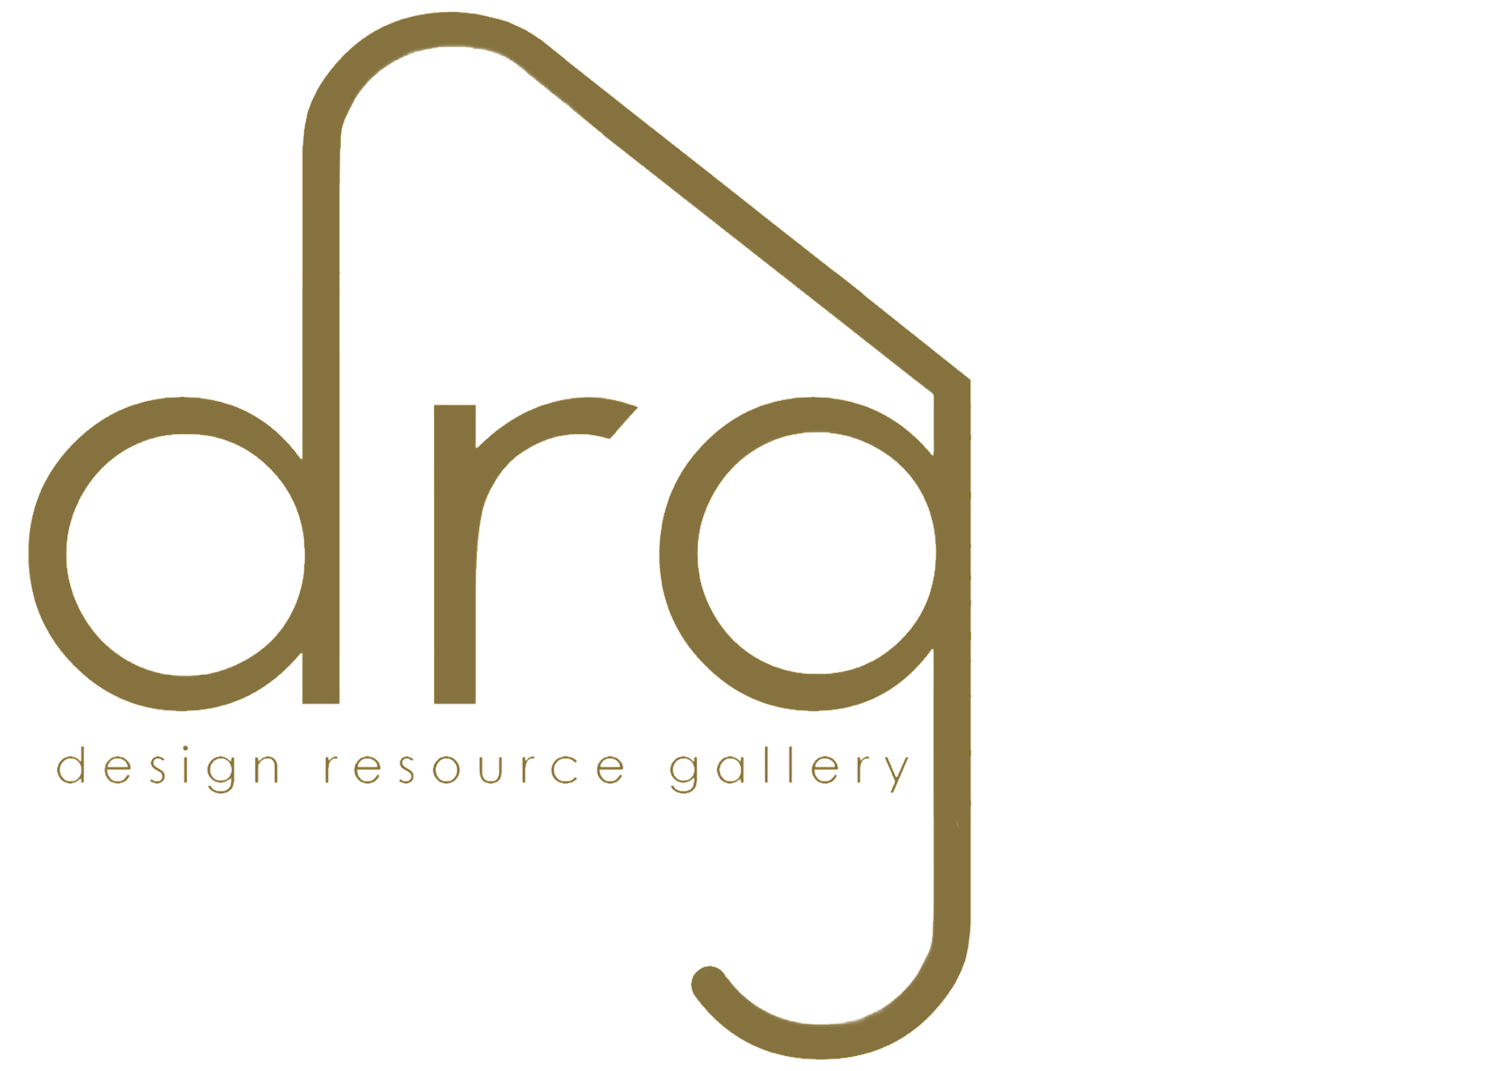  Design Resource Gallery